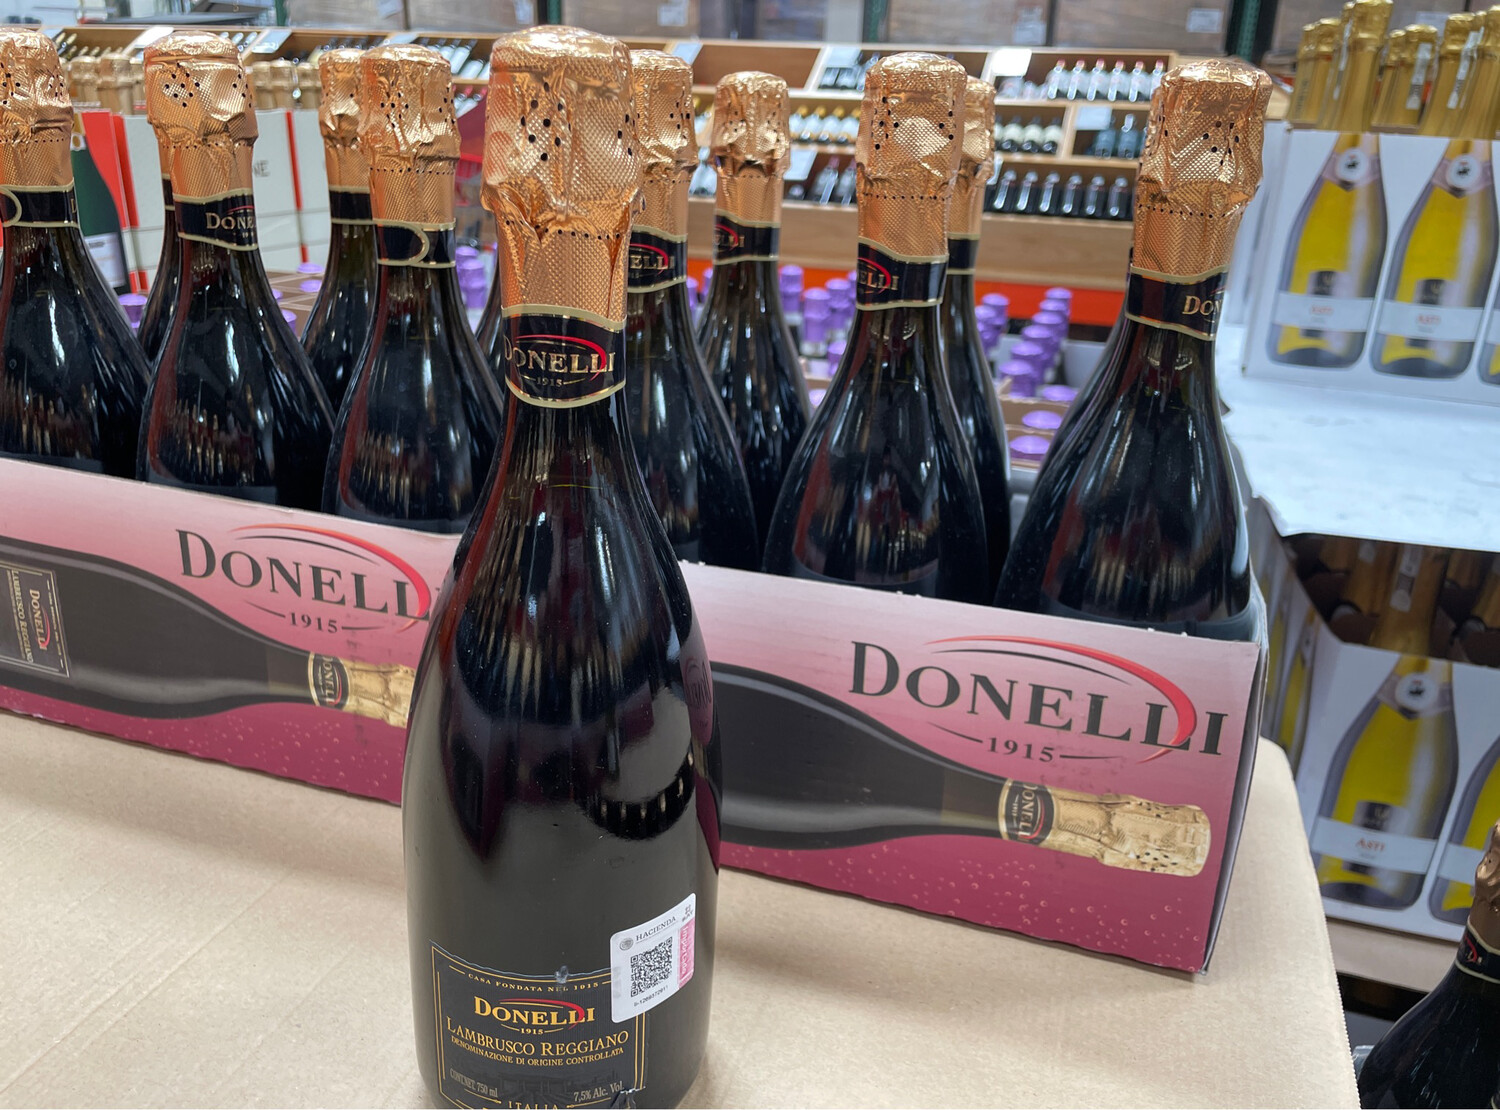 Donelli Lambrusco sparkling red wine 750ml